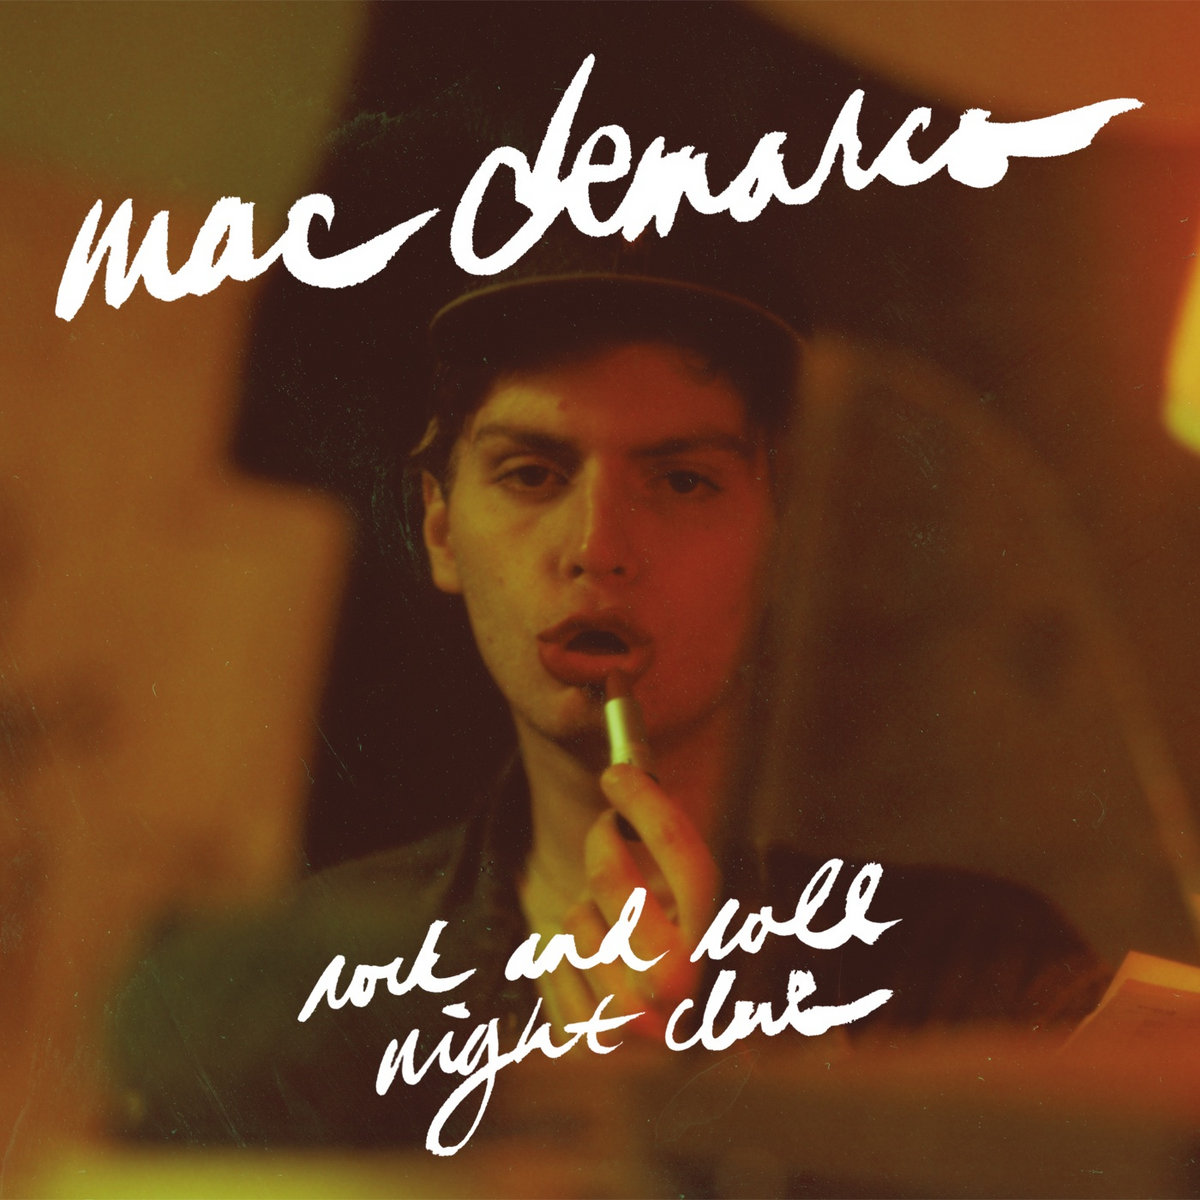 Mac Demarco "Rock And Roll Night Club" LP